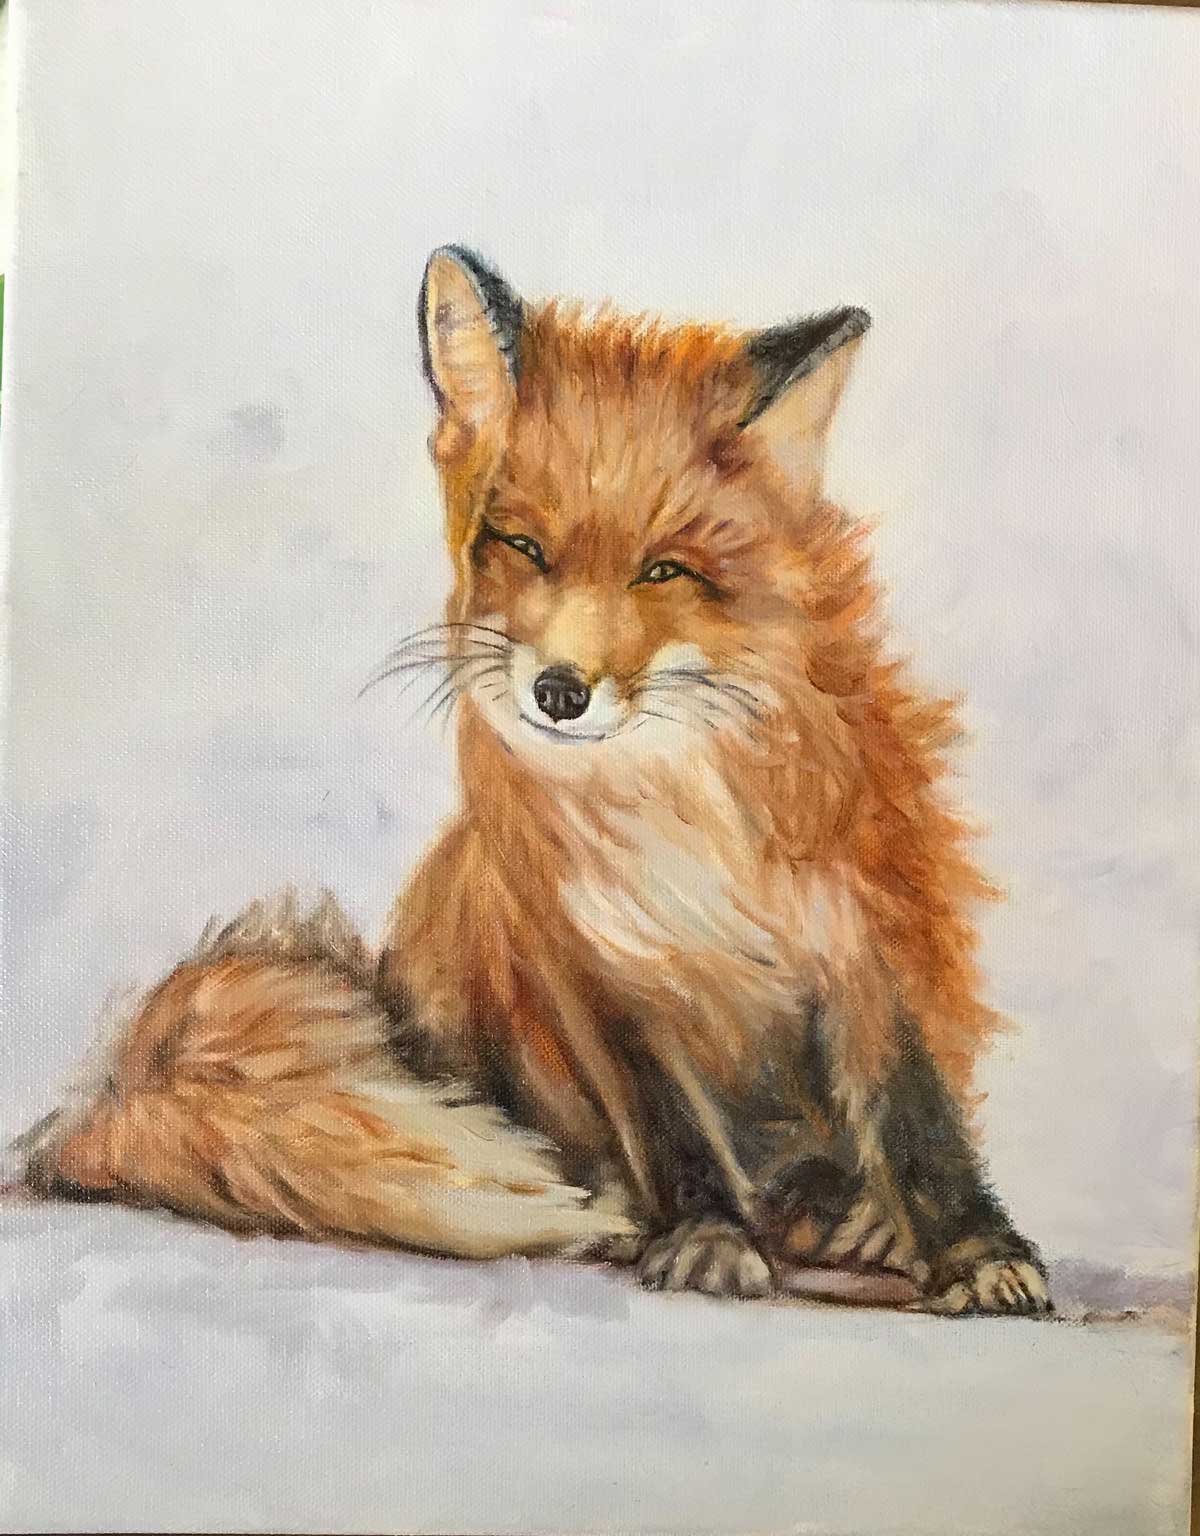 Fox Portrait